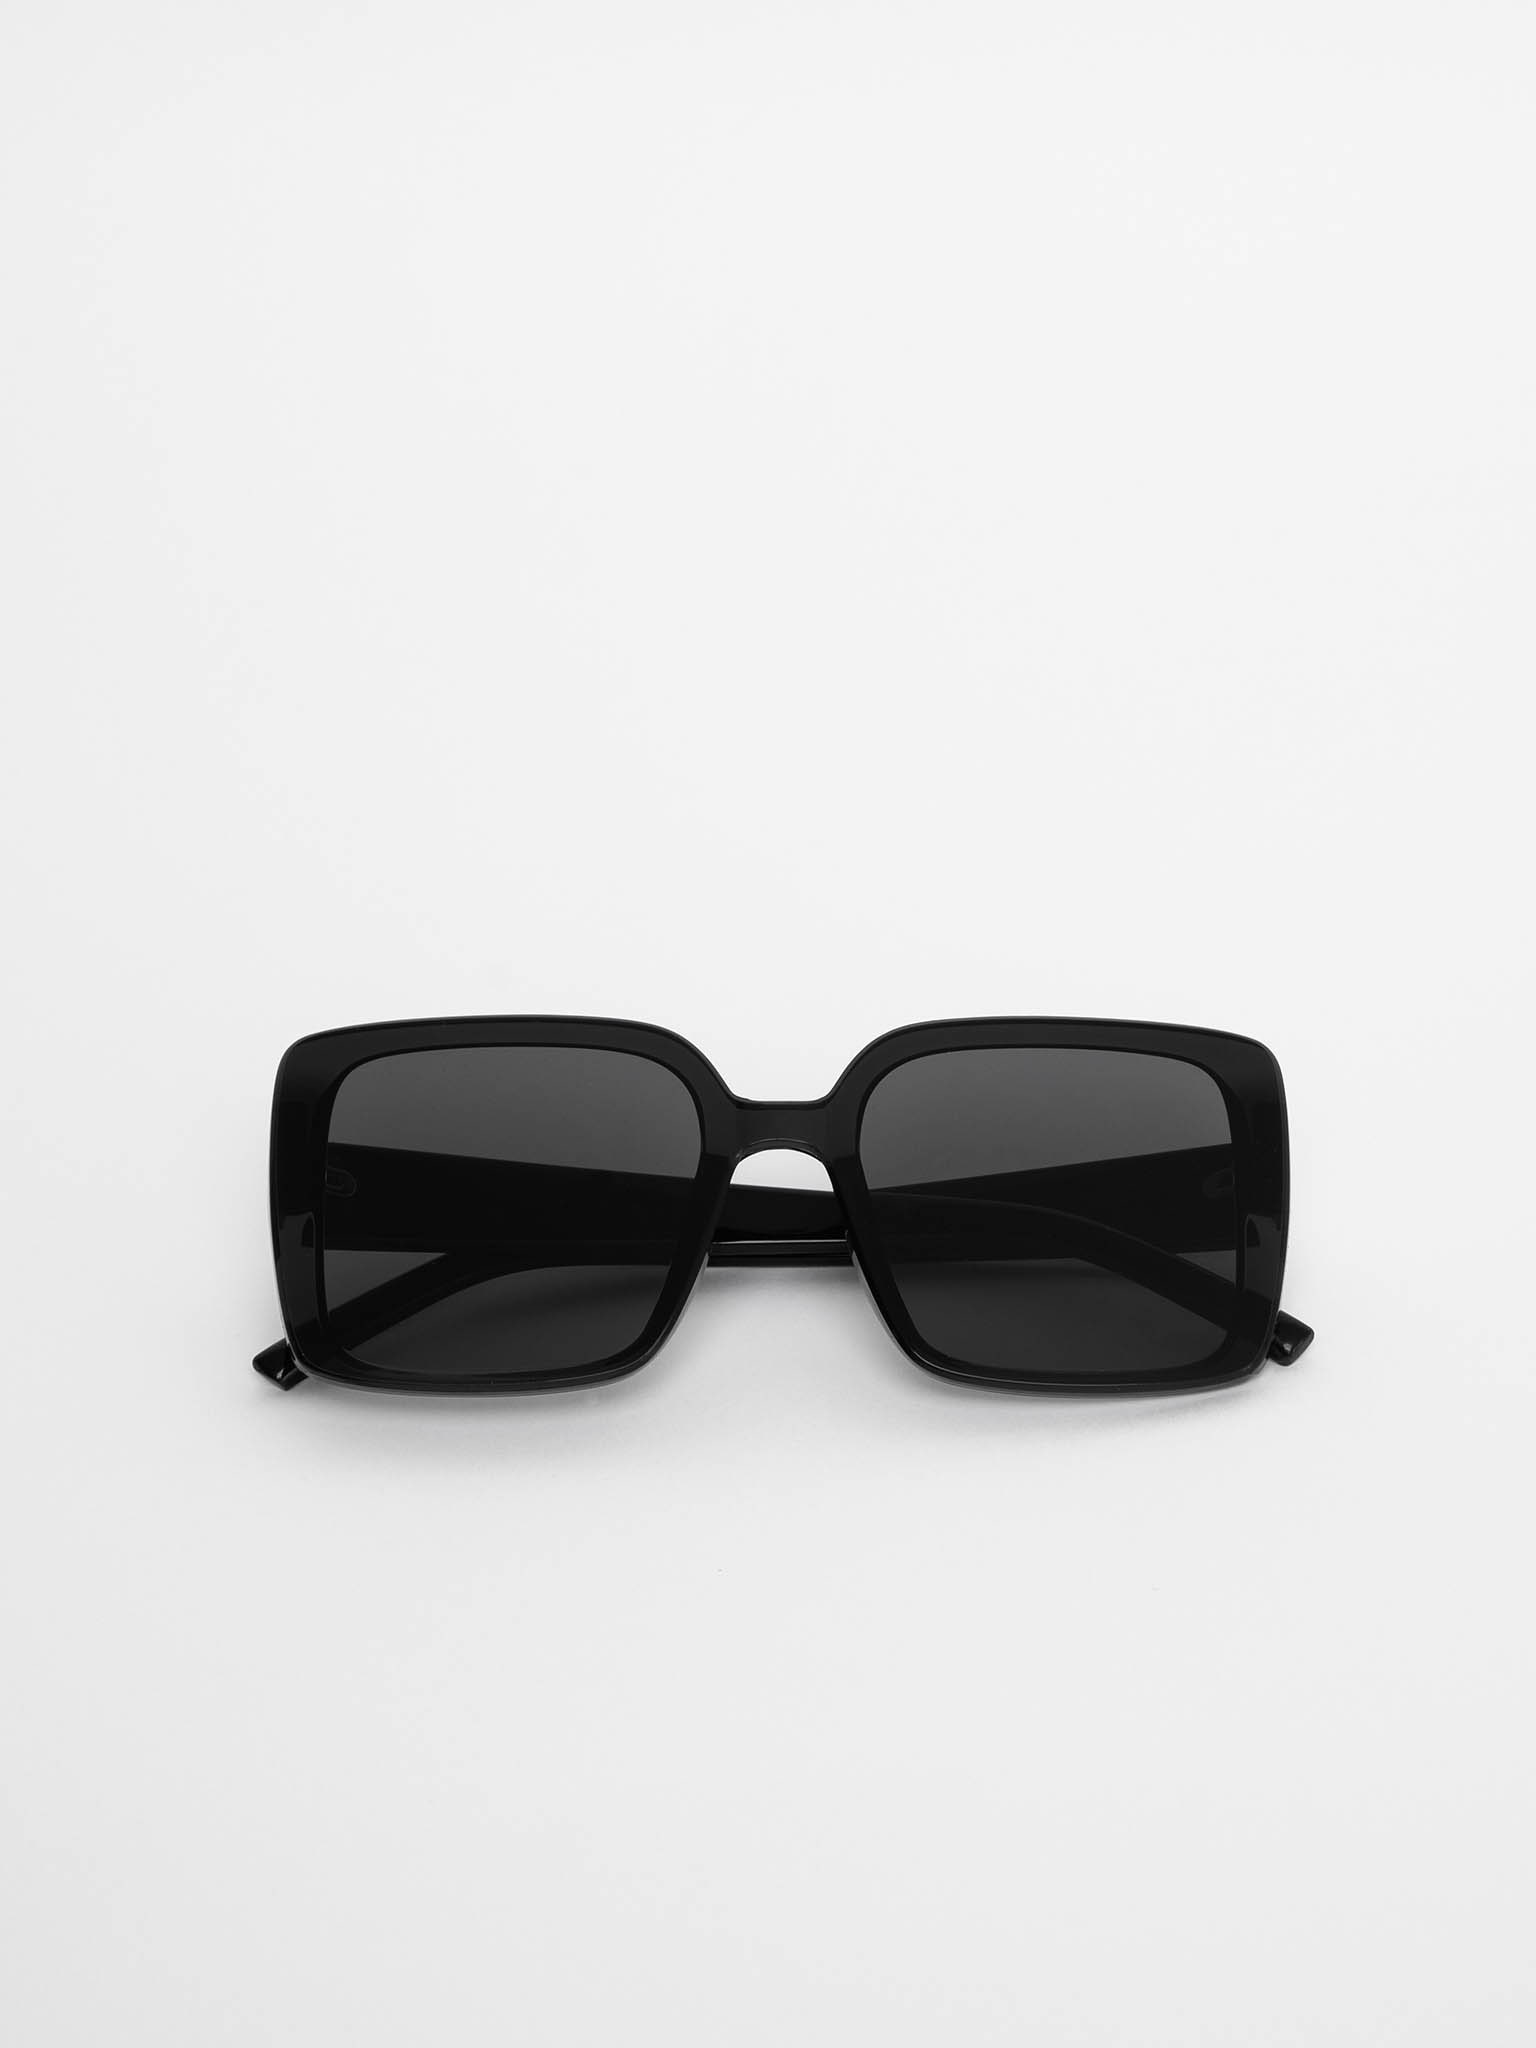 LICHI - Online fashion store :: Oversized square-shaped sunglasses